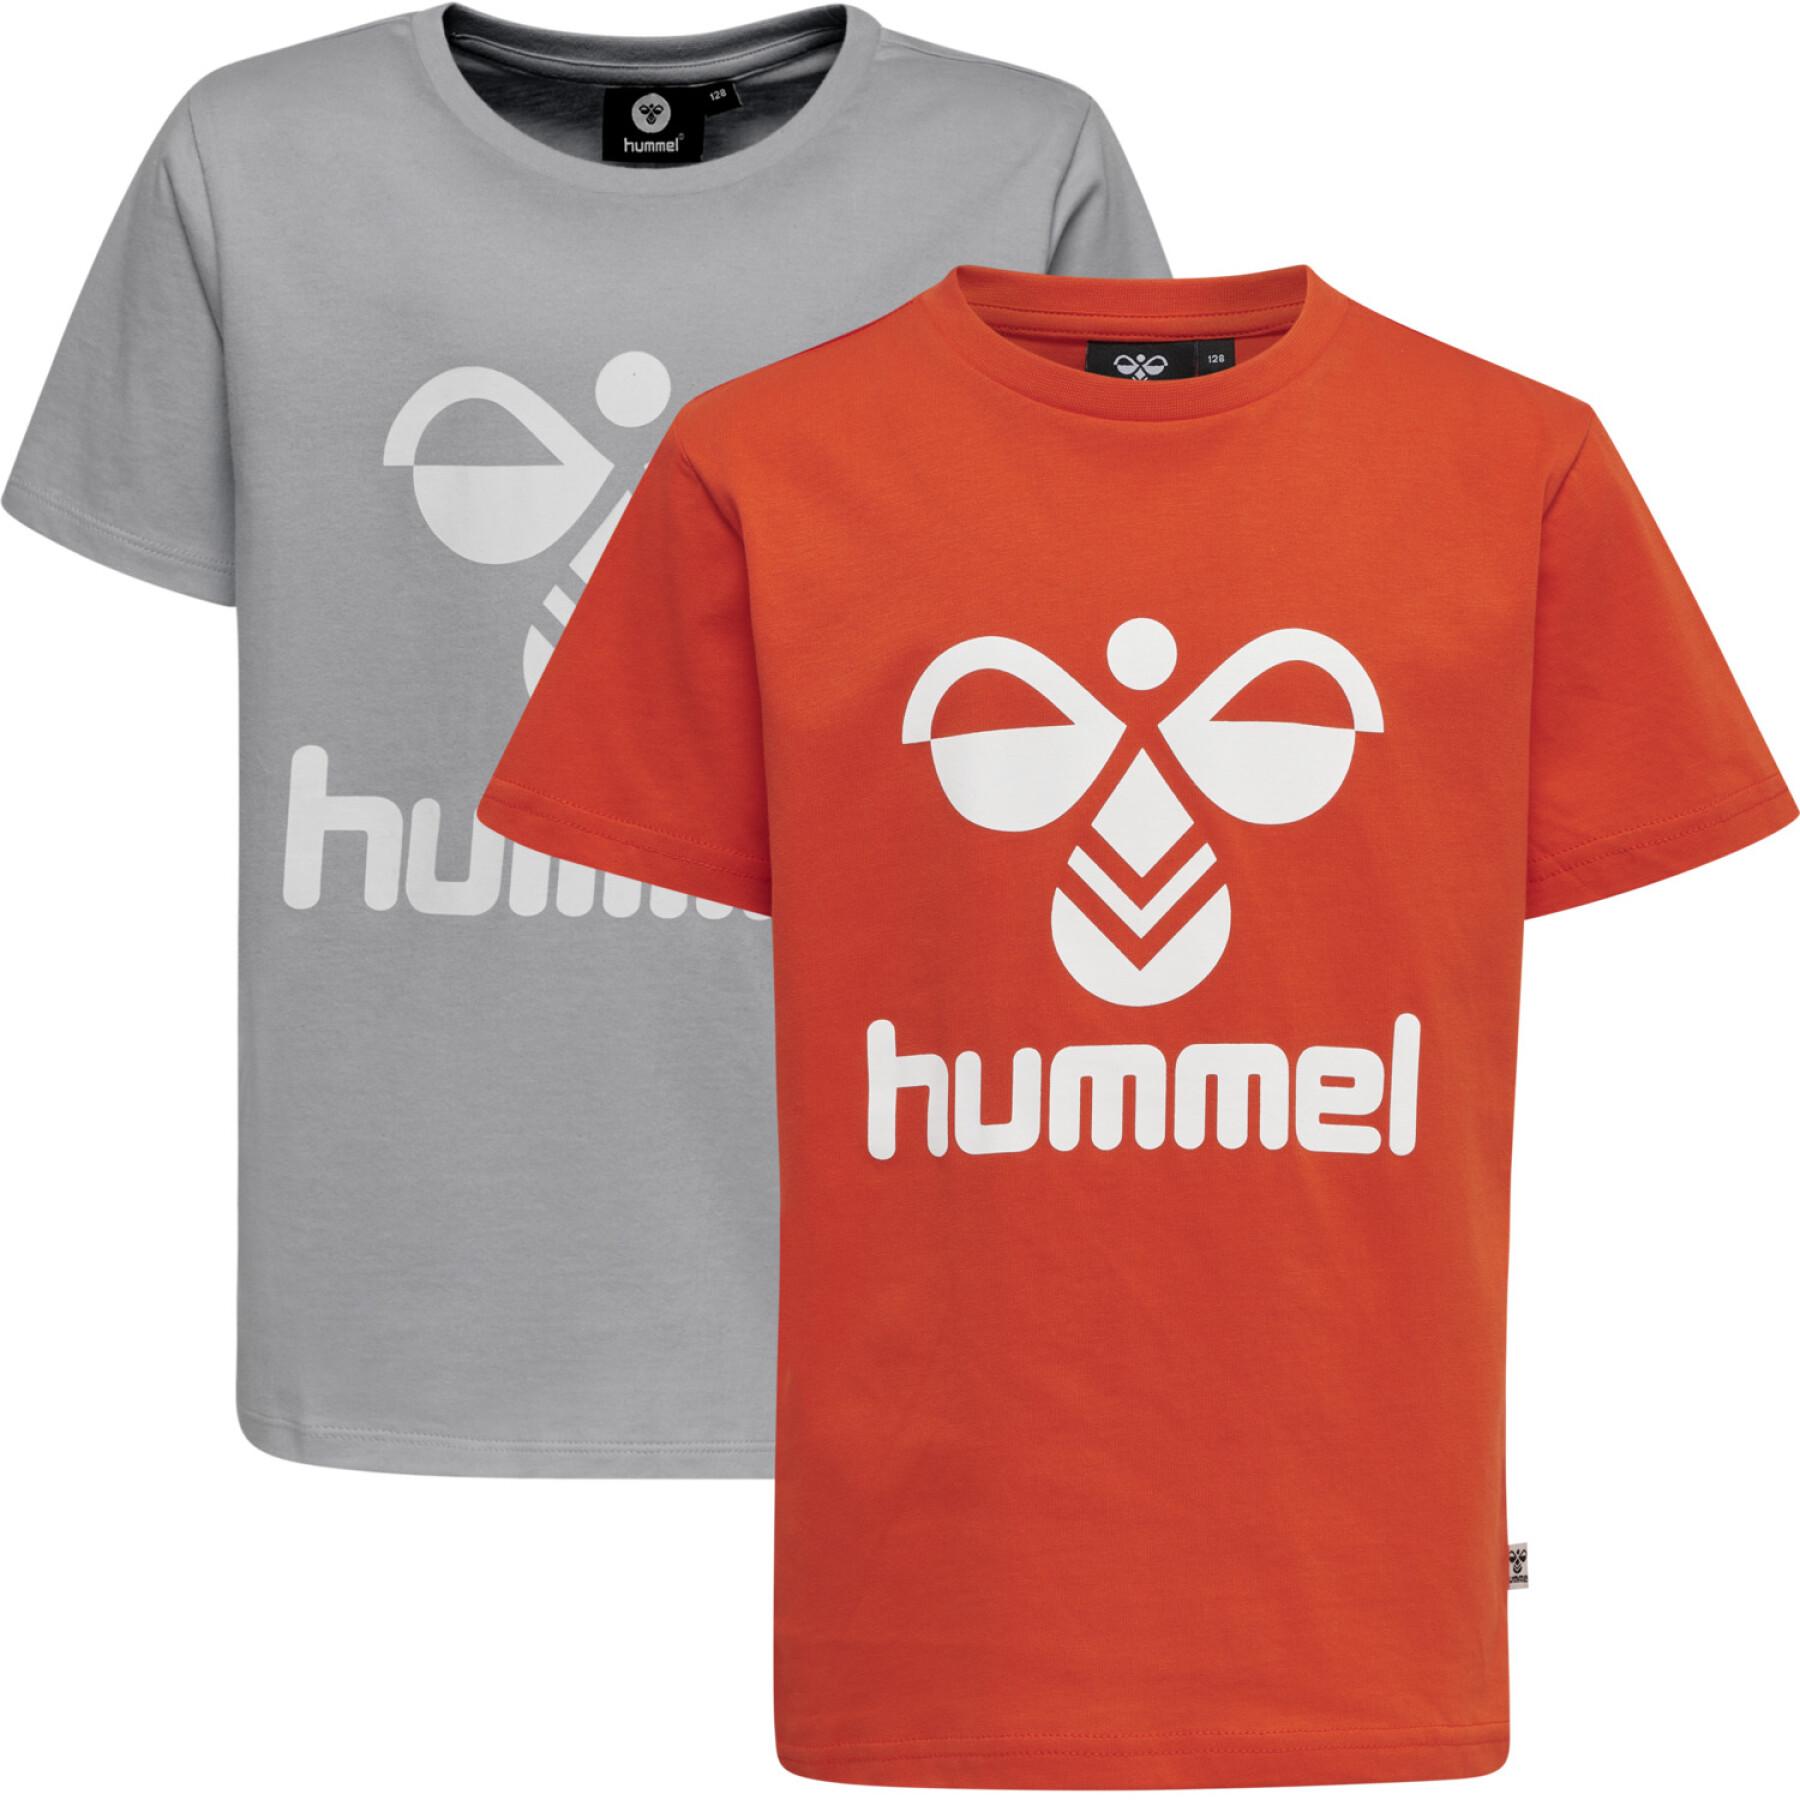 Magliette per bambini Hummel tres (x2)